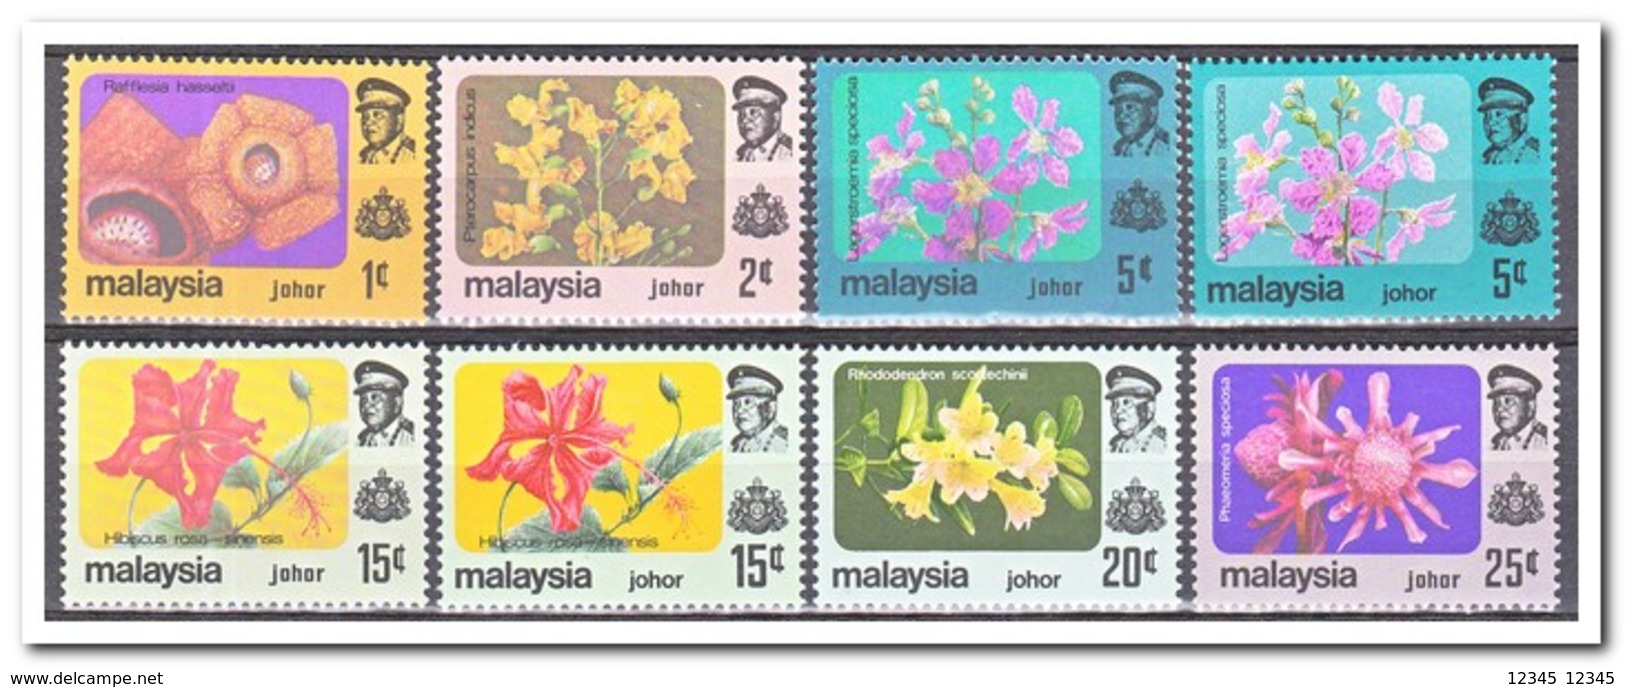 Maleisië Johor 1979, Postfris MNH, Flowers - Malaysia (1964-...)